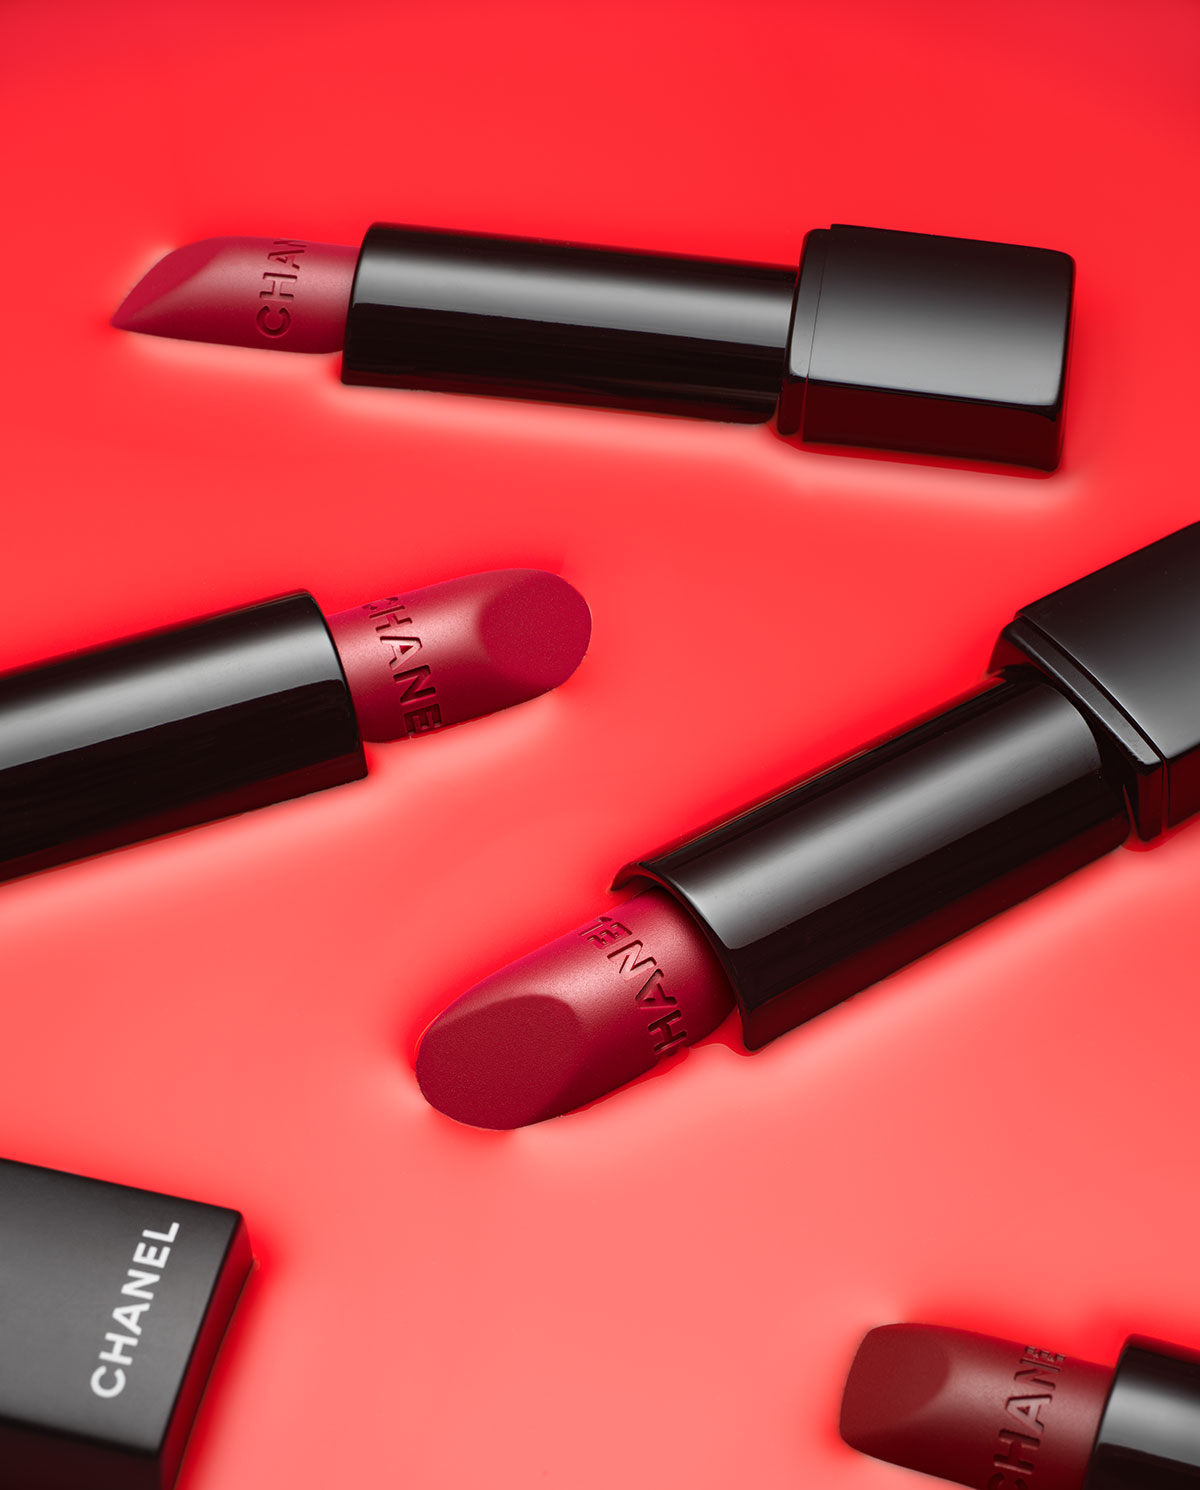 Chanel lipsticks product photo